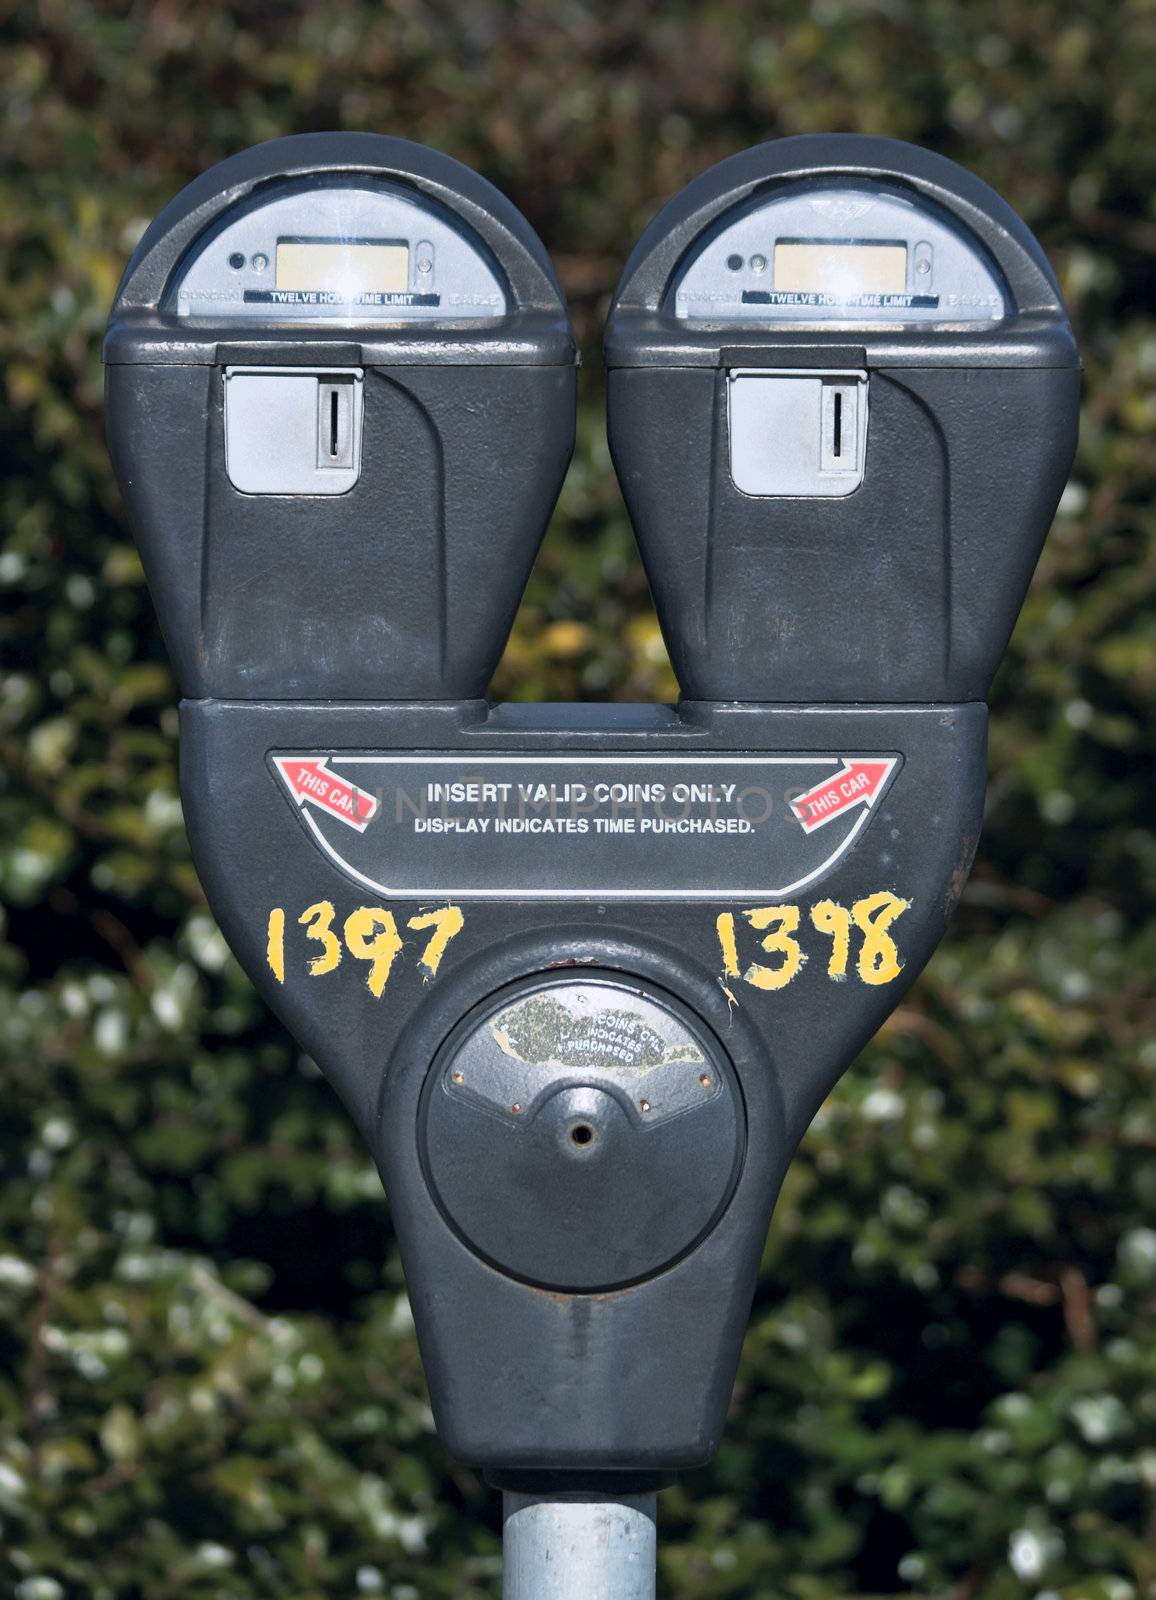 Parking Meter by sbonk